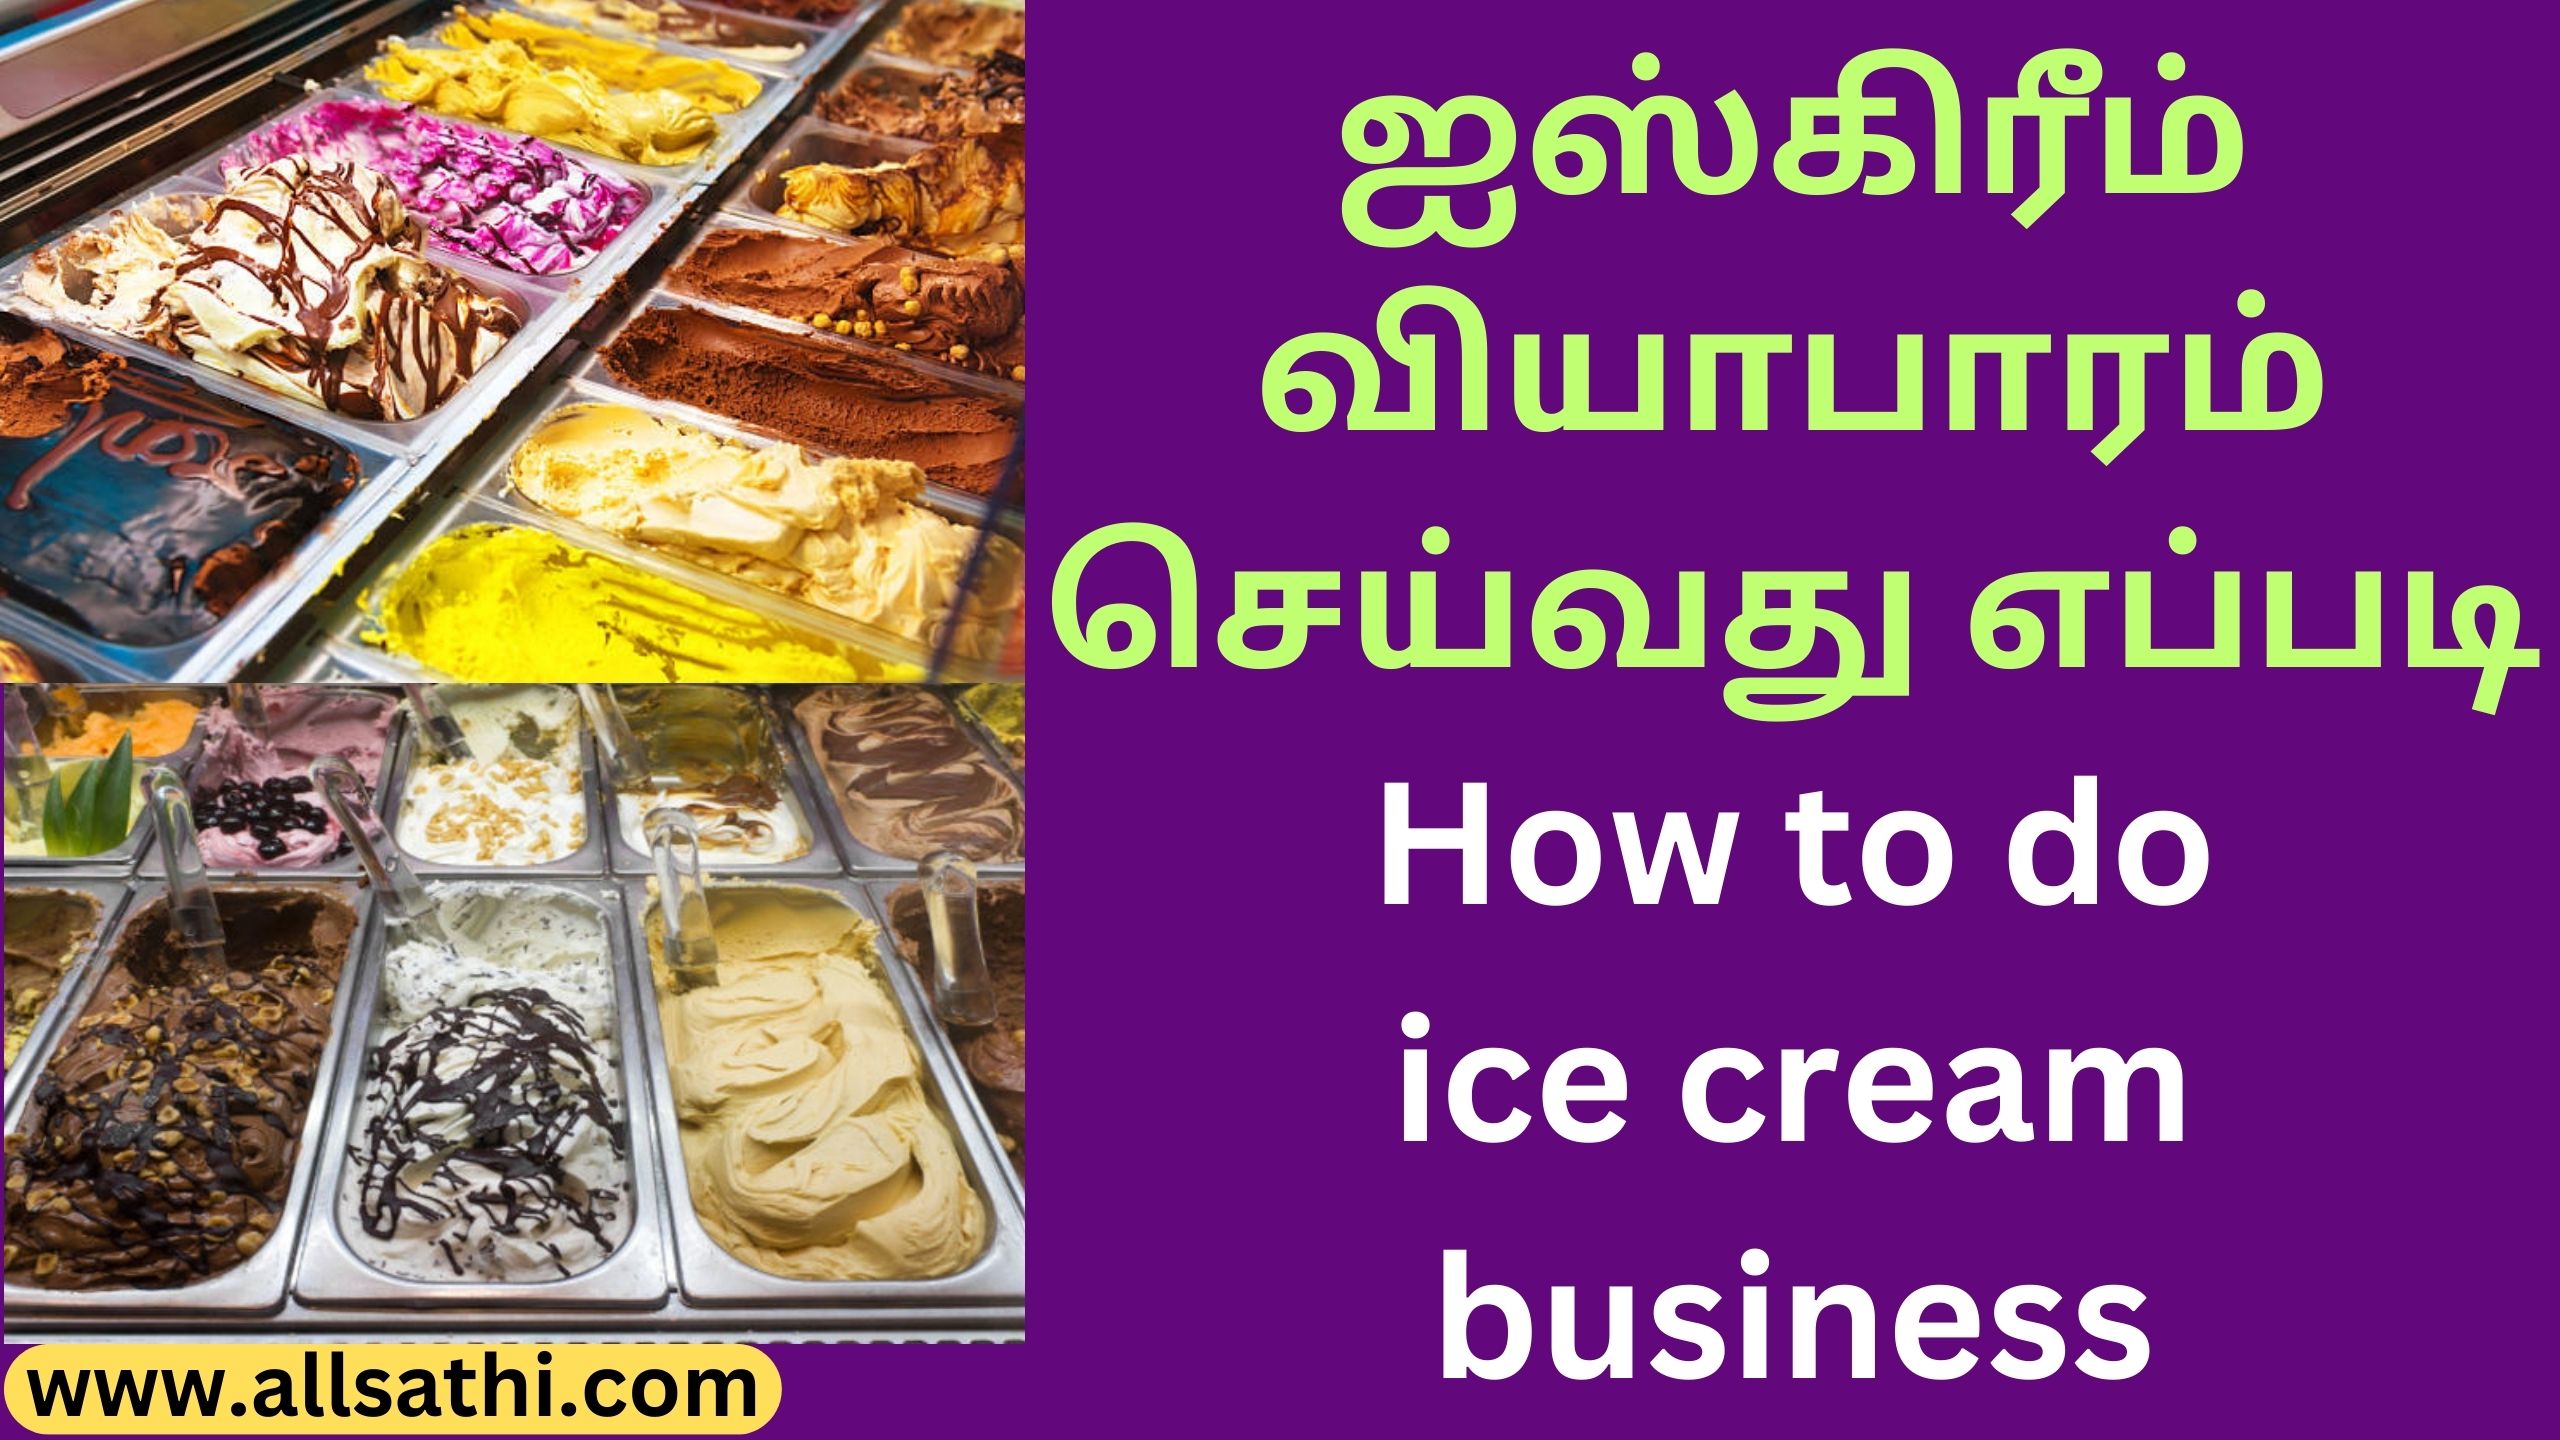 How to do ice cream business